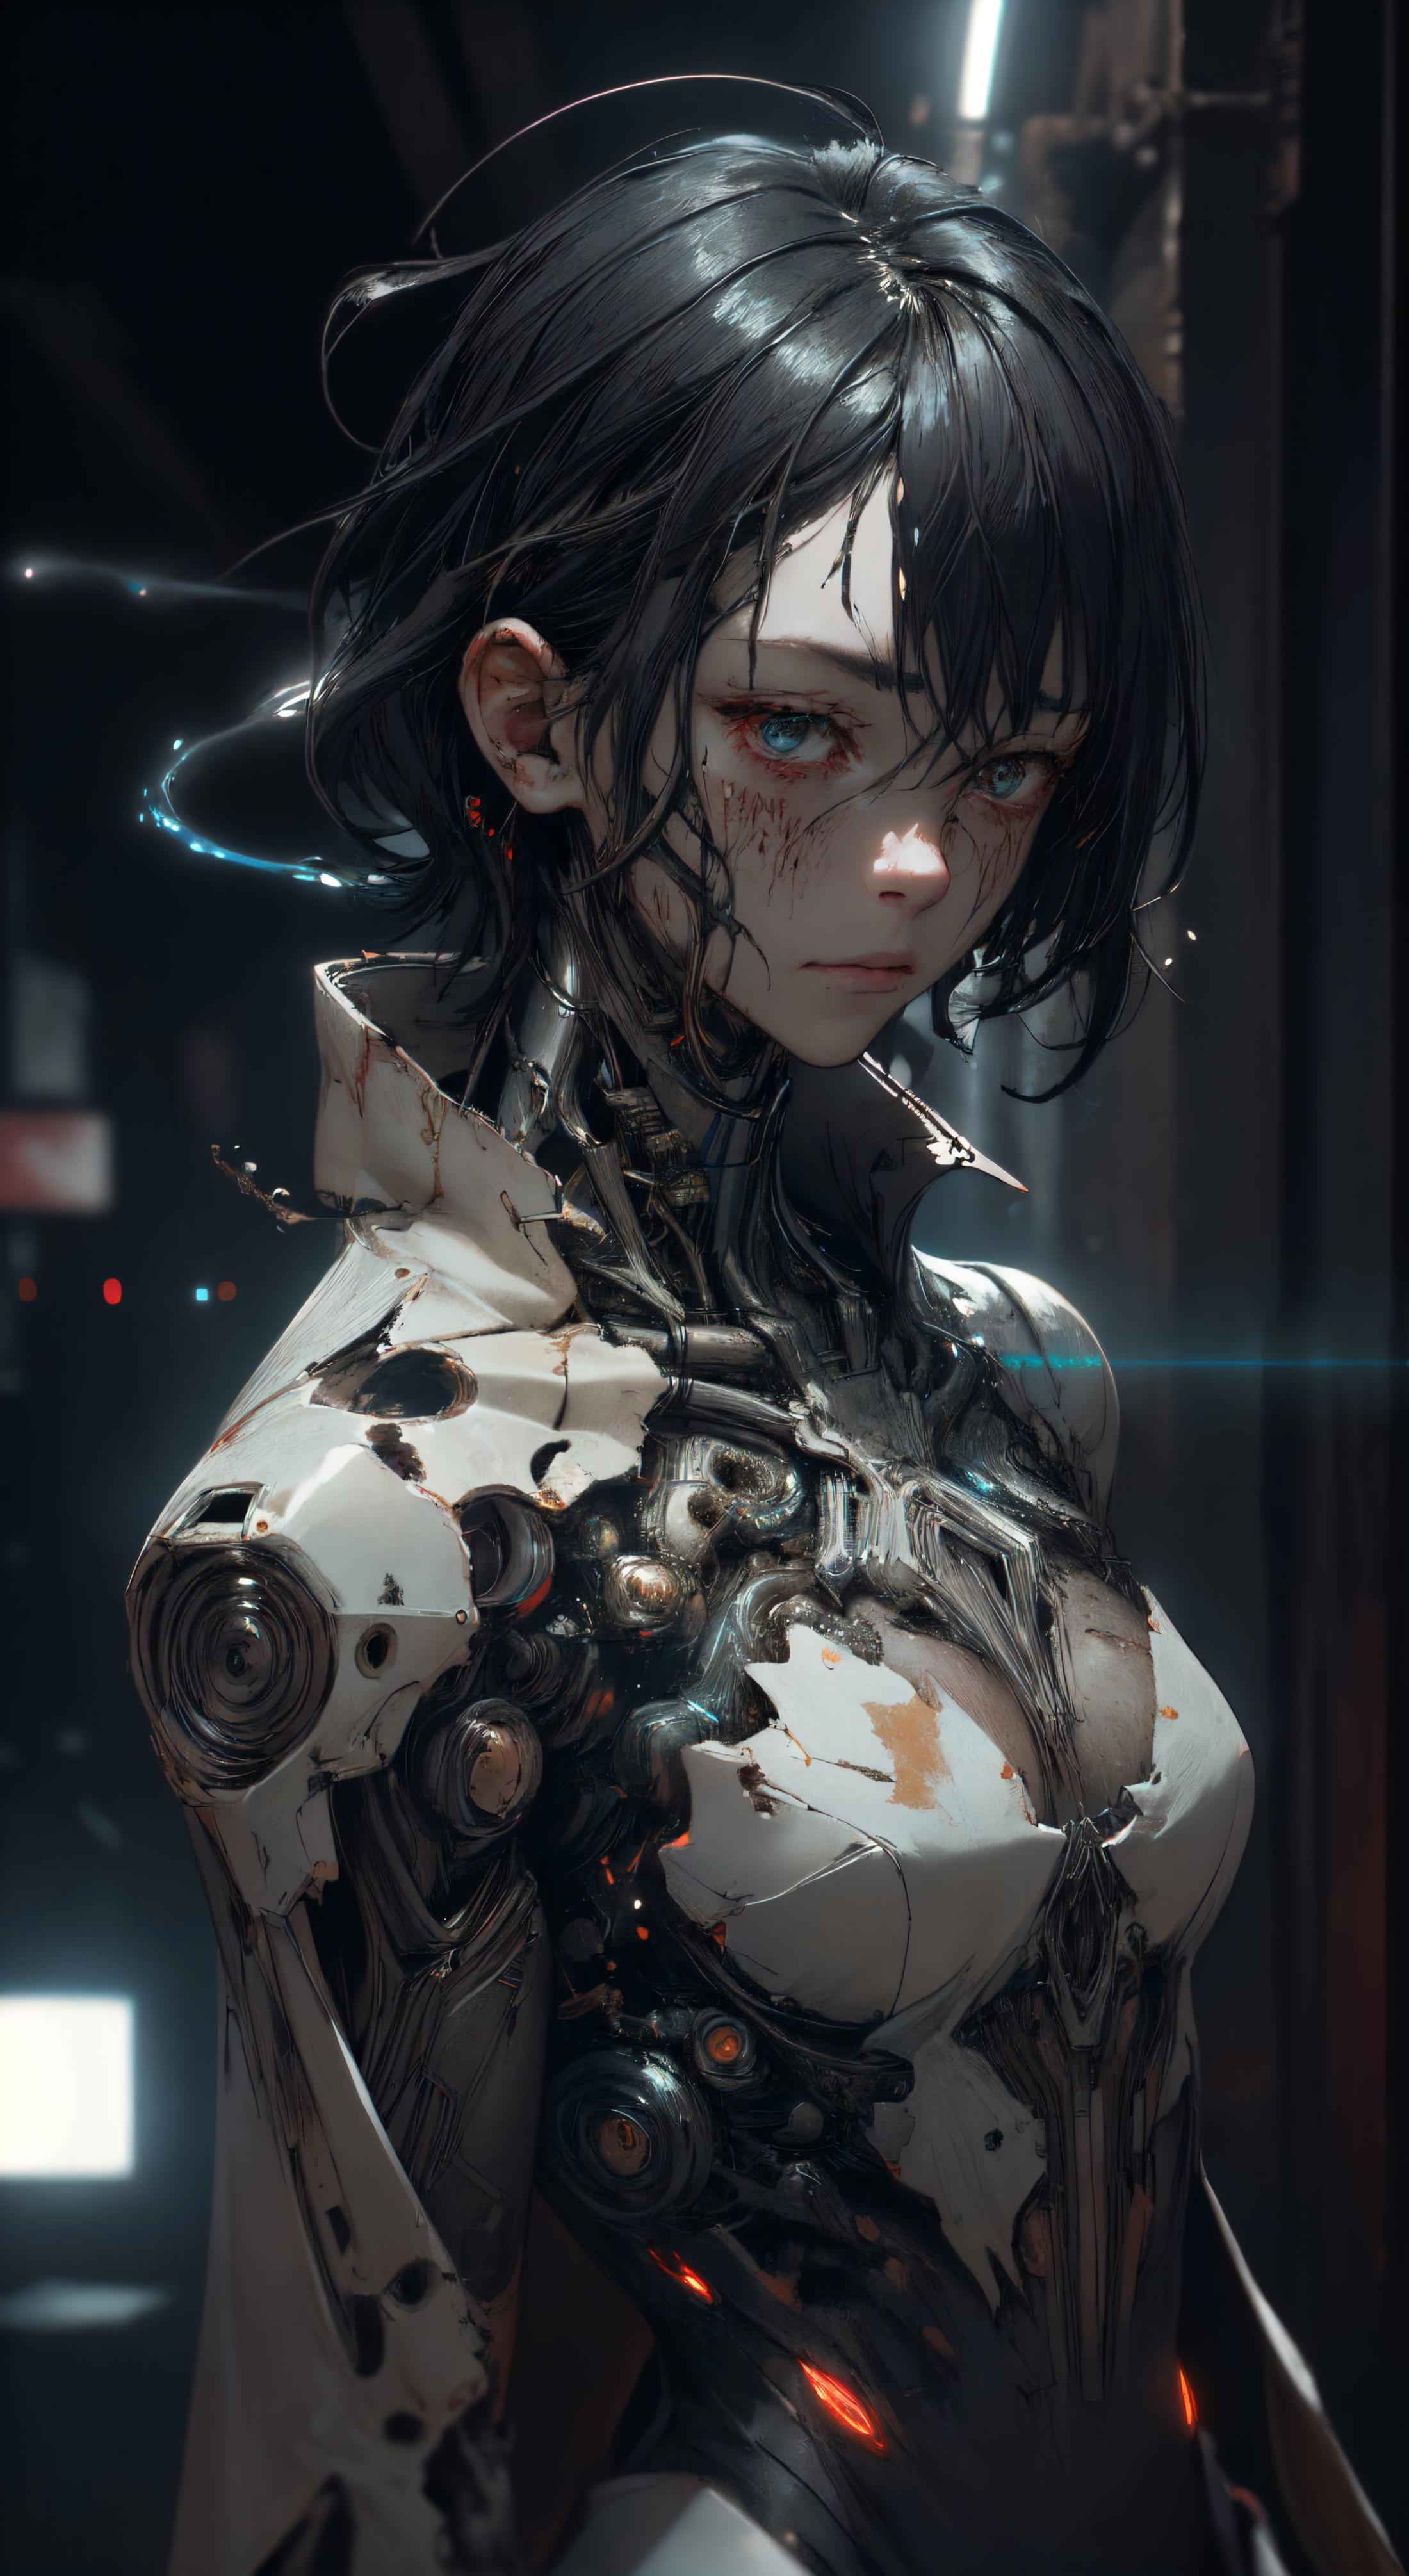 AI model image by okamuron